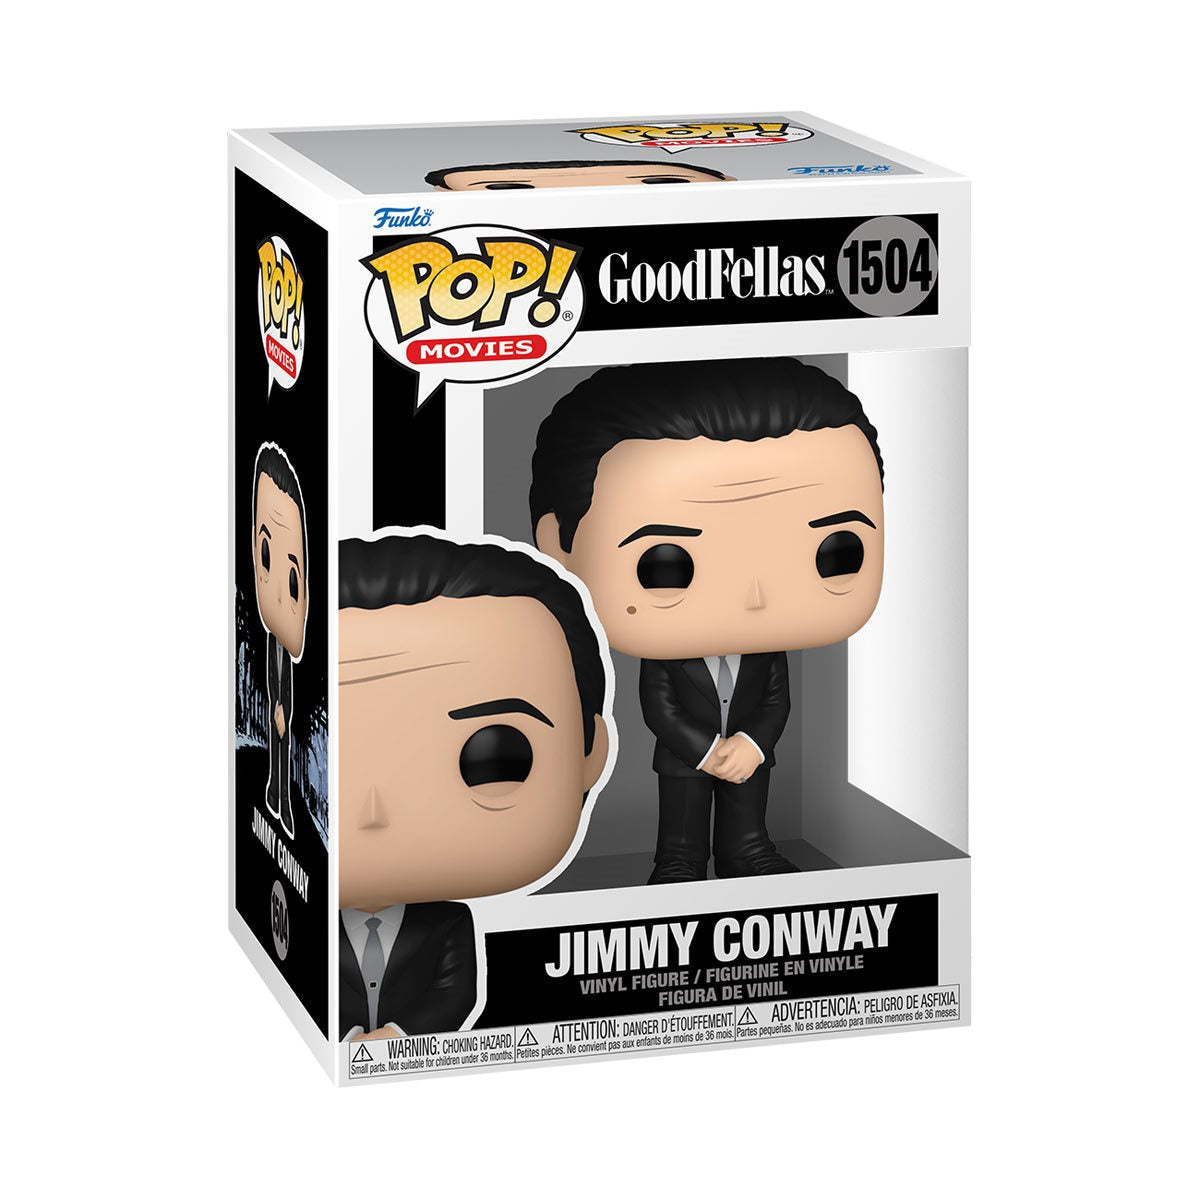 Pop! Movies 1504 GoodFellas: Jimmy Conway